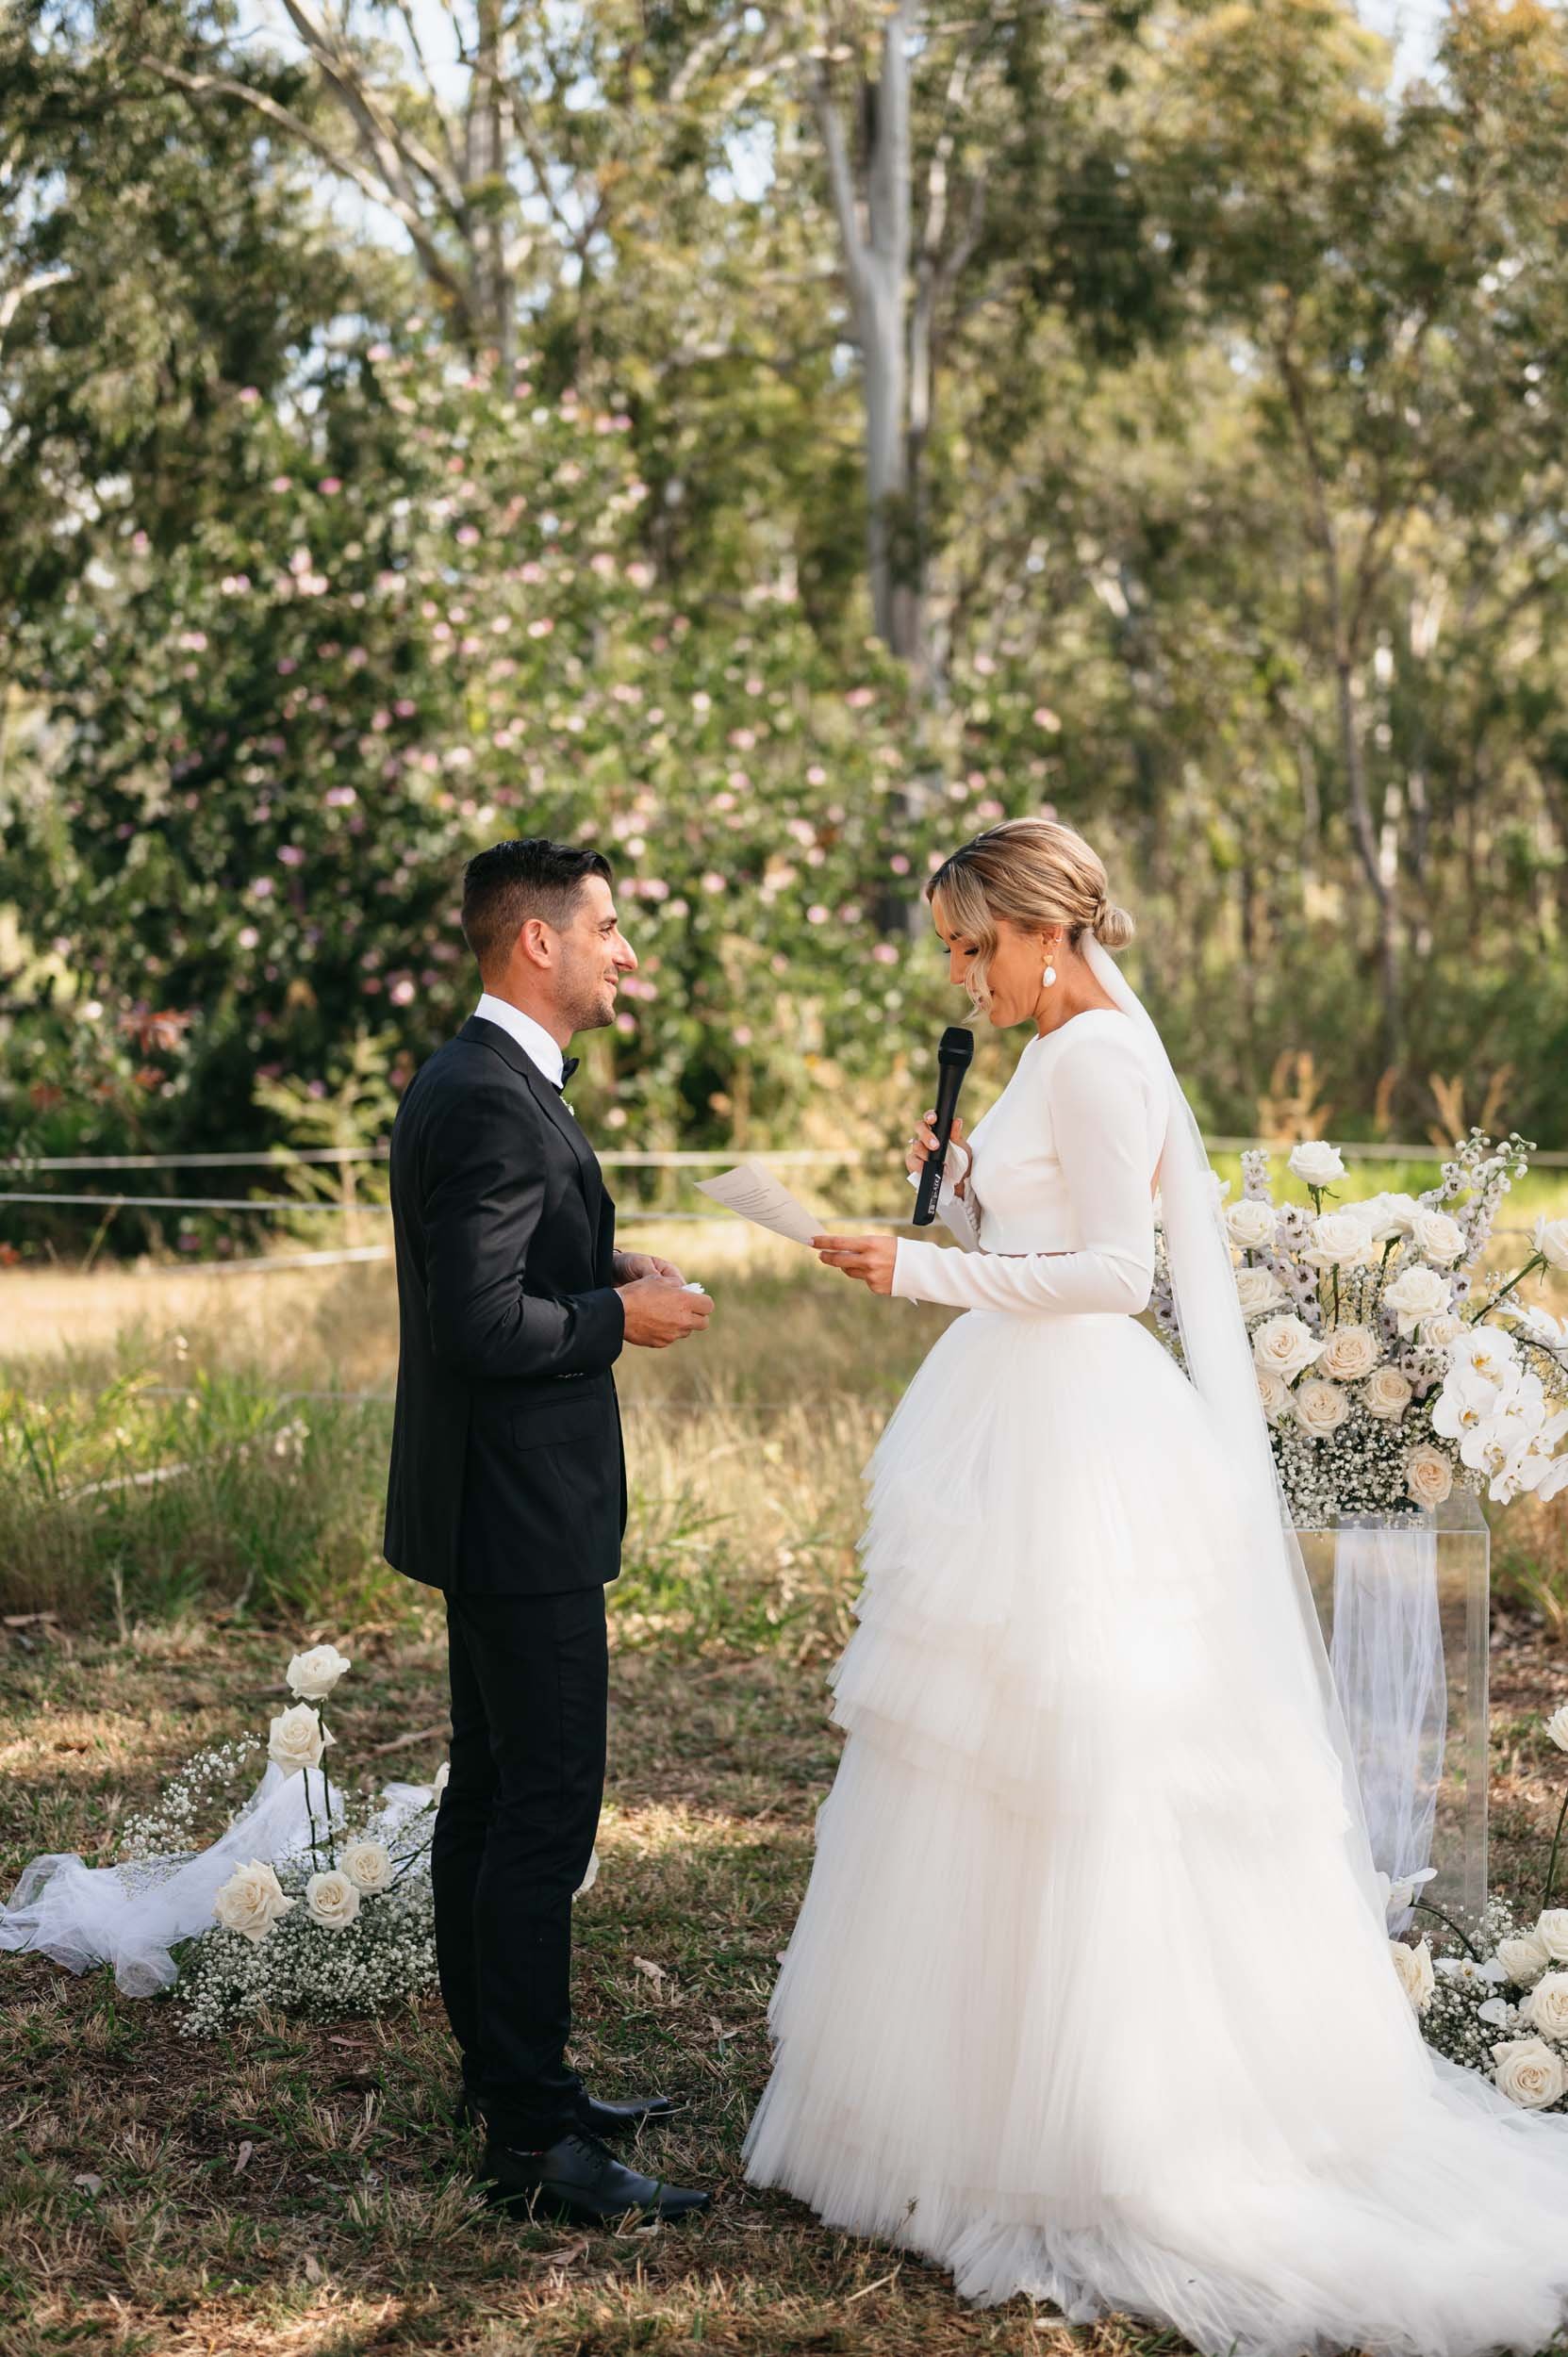 The Raw Photographer - Cairns Wedding Photographer - Mareeba Tablelands - Queensland photography - Kyha dress - luxury-29.jpg